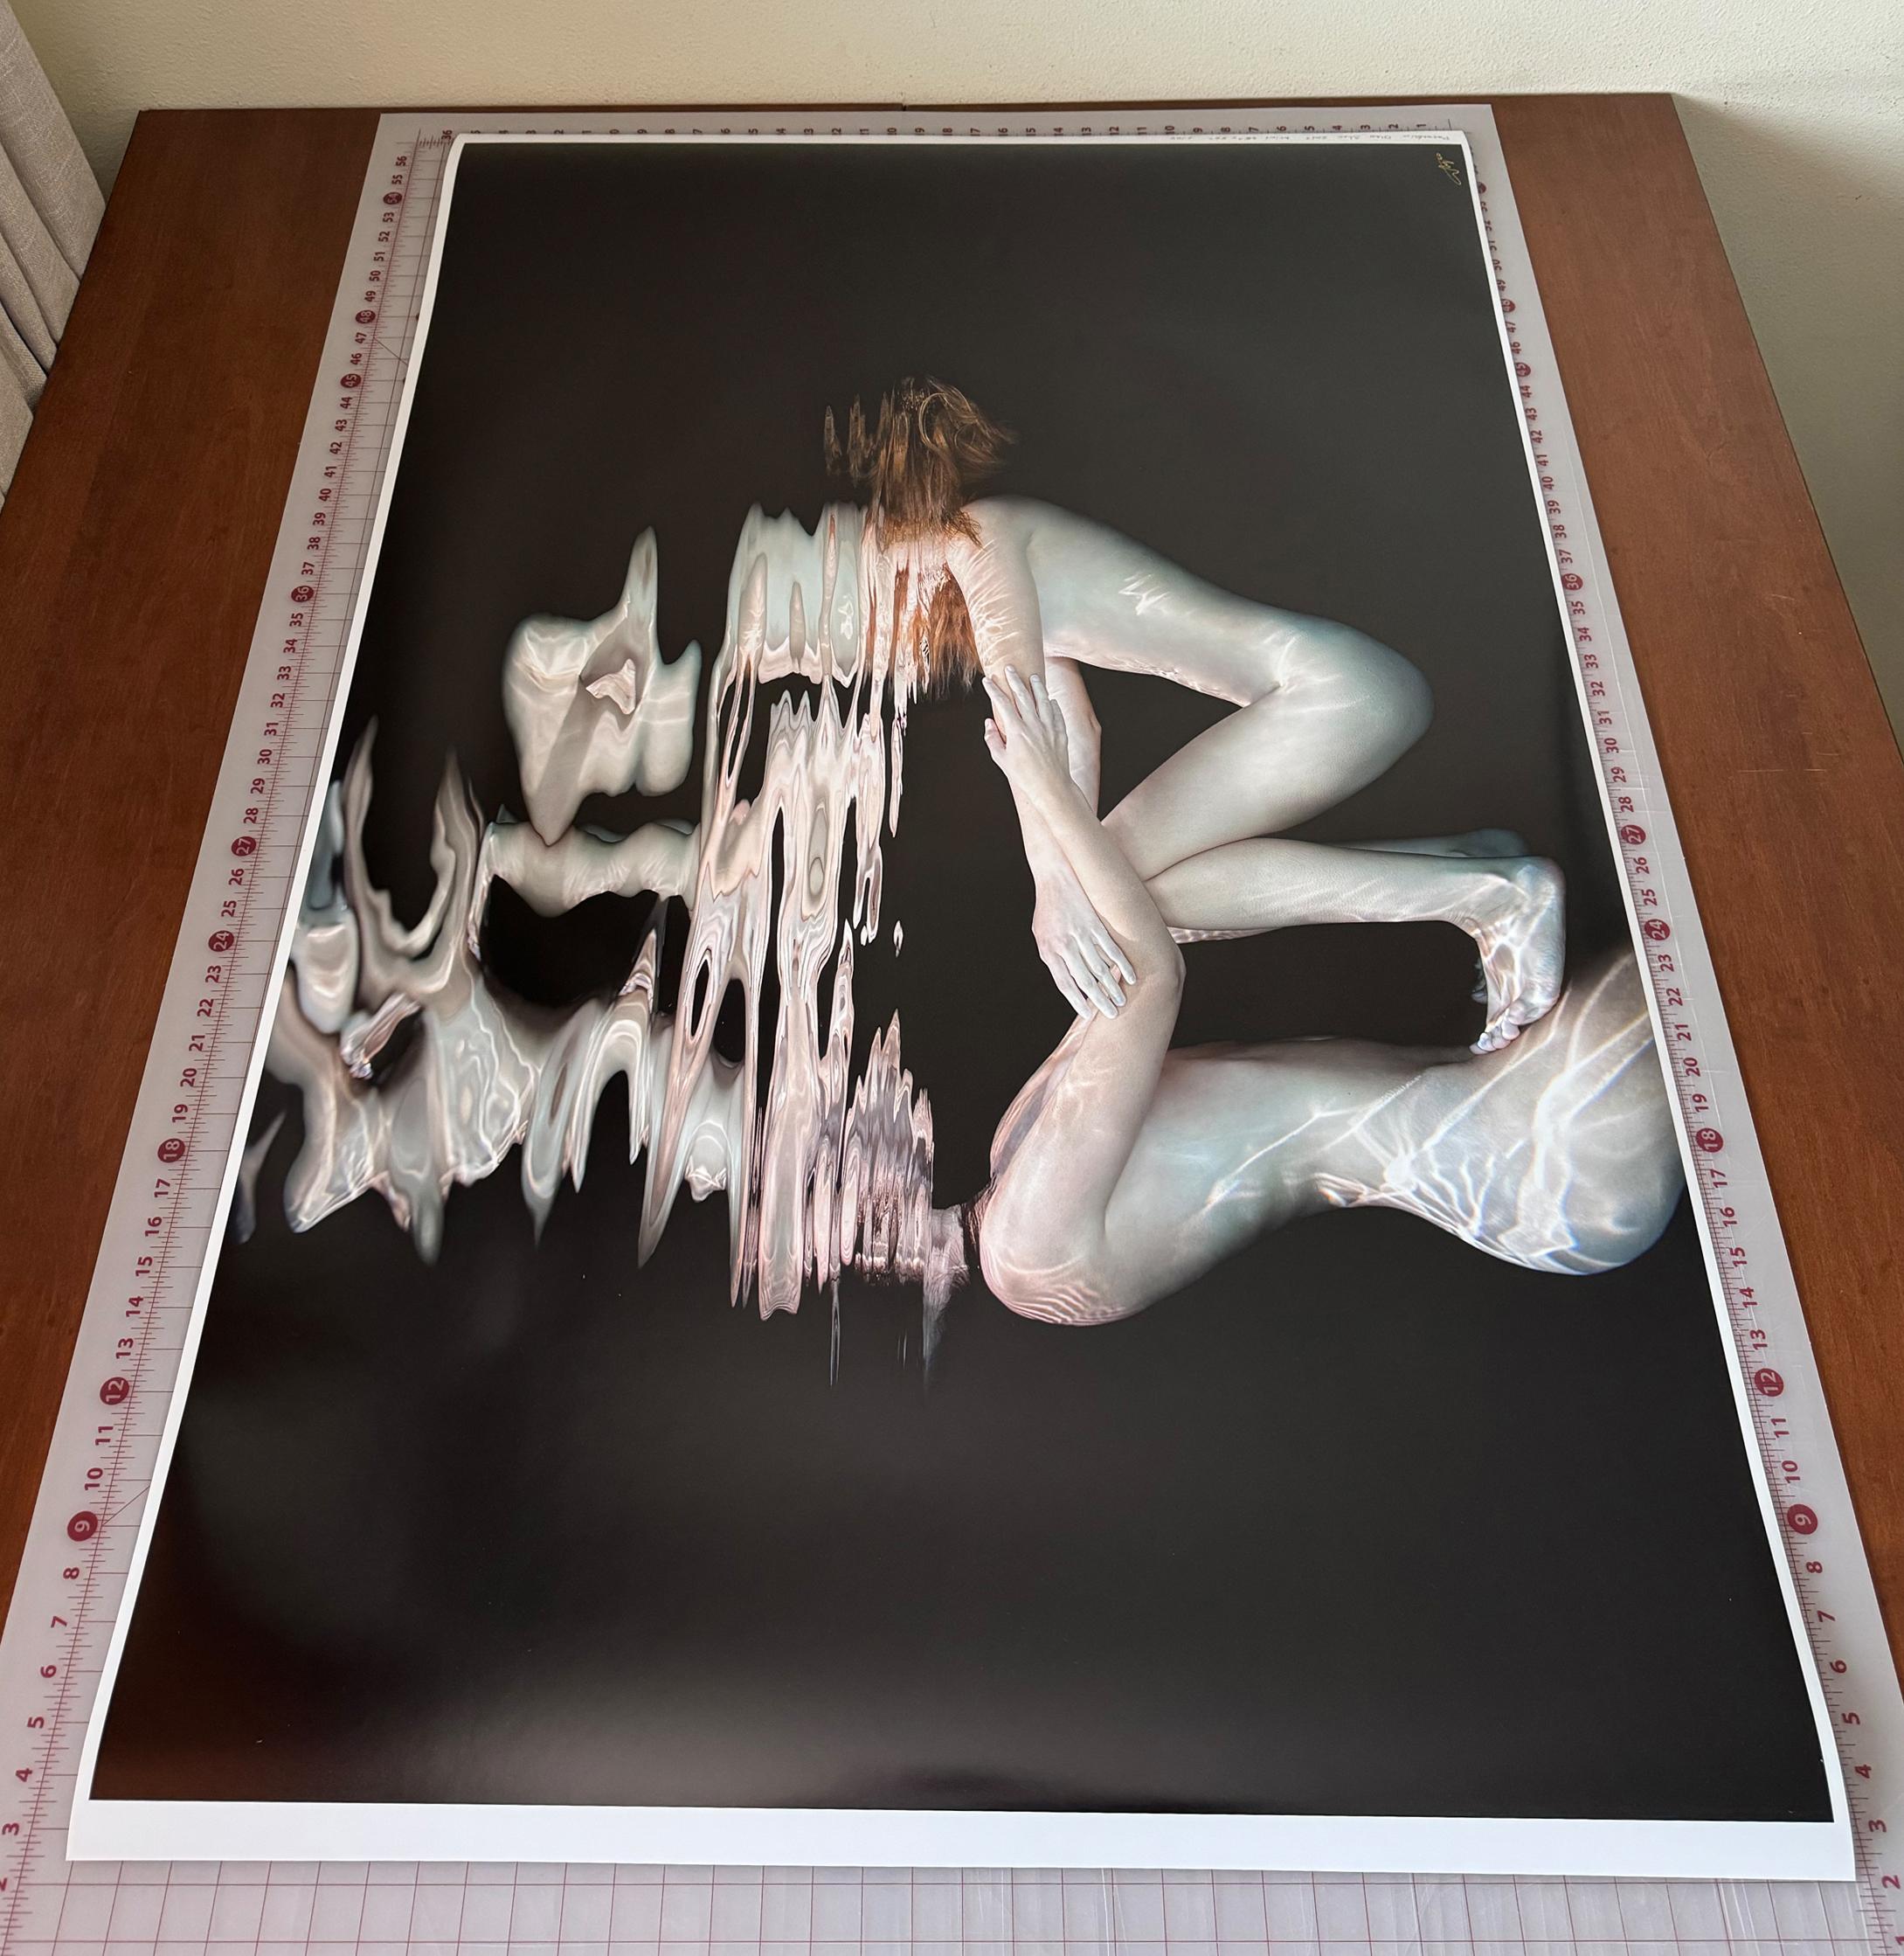 Porcelain  - underwater nude photograph - archival pigment print 35